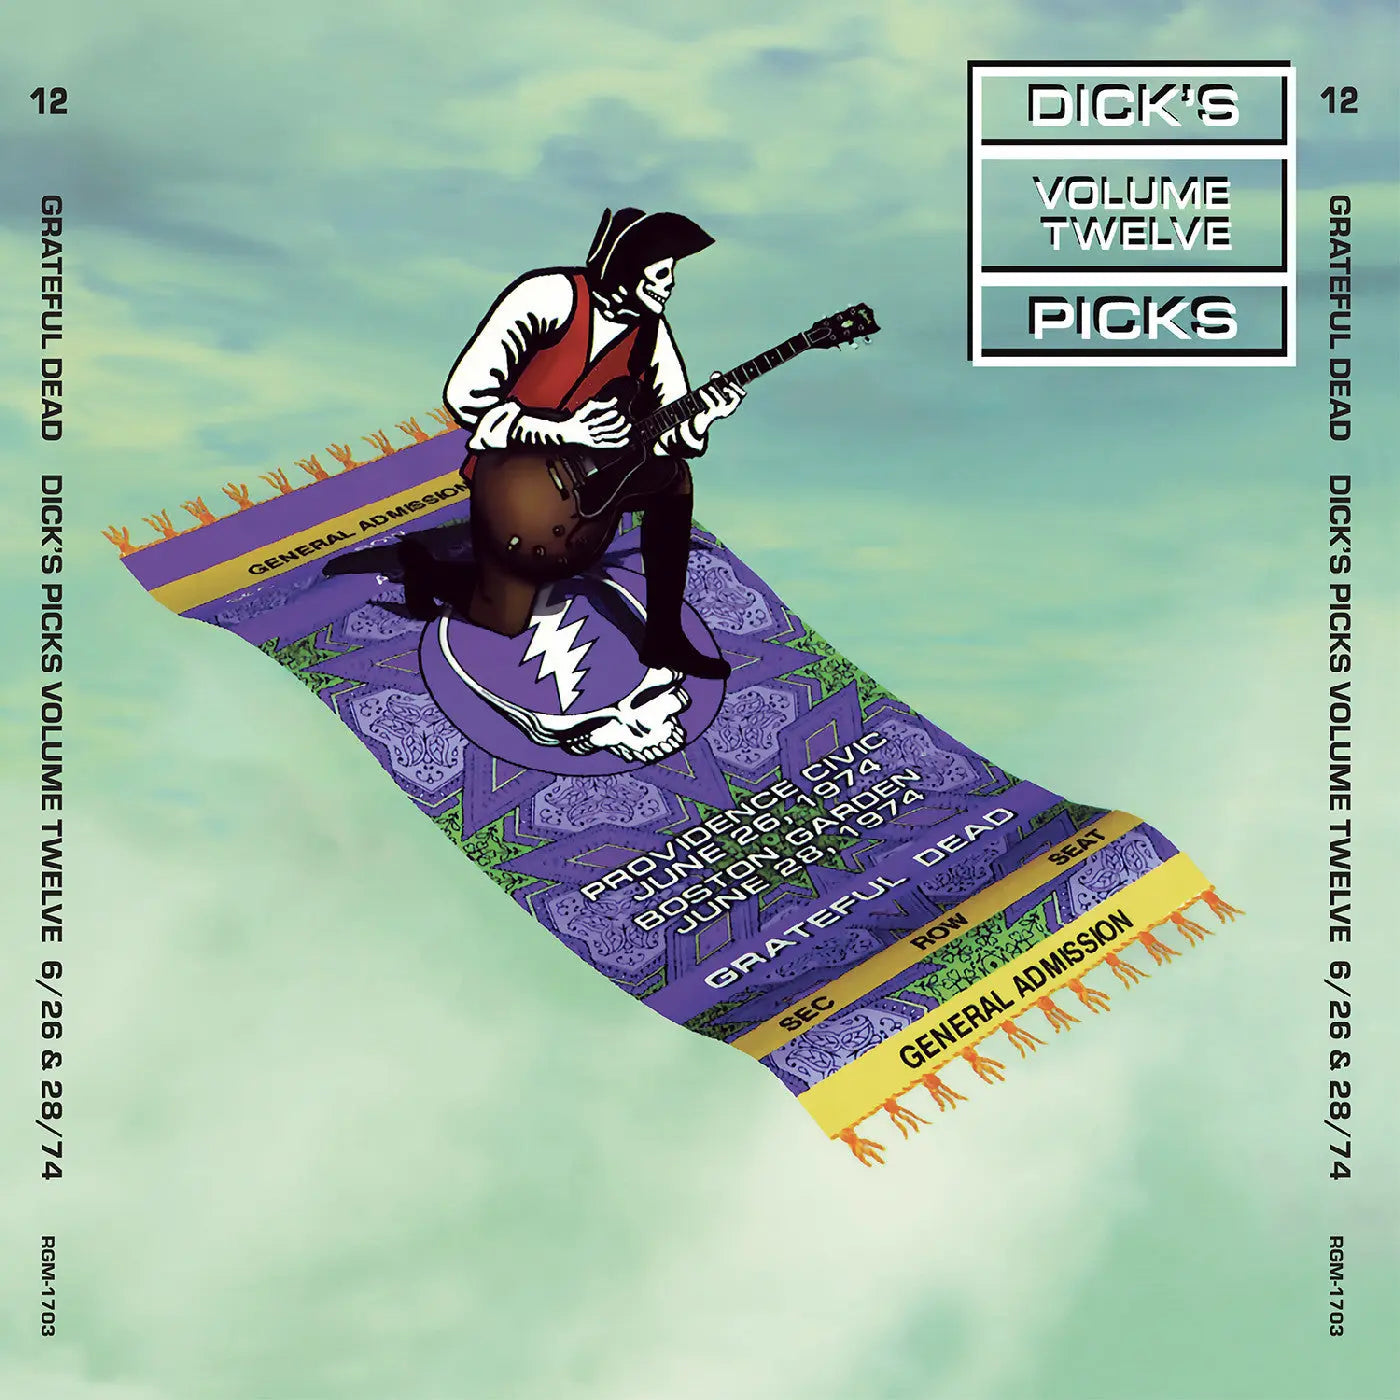 Grateful Dead - Dick’s Picks Vol. 12 Providence Civic Center 6/26/74 & Boston Garden 6/28/74 [6LP Vinyl Box Set Hand-Numbered]